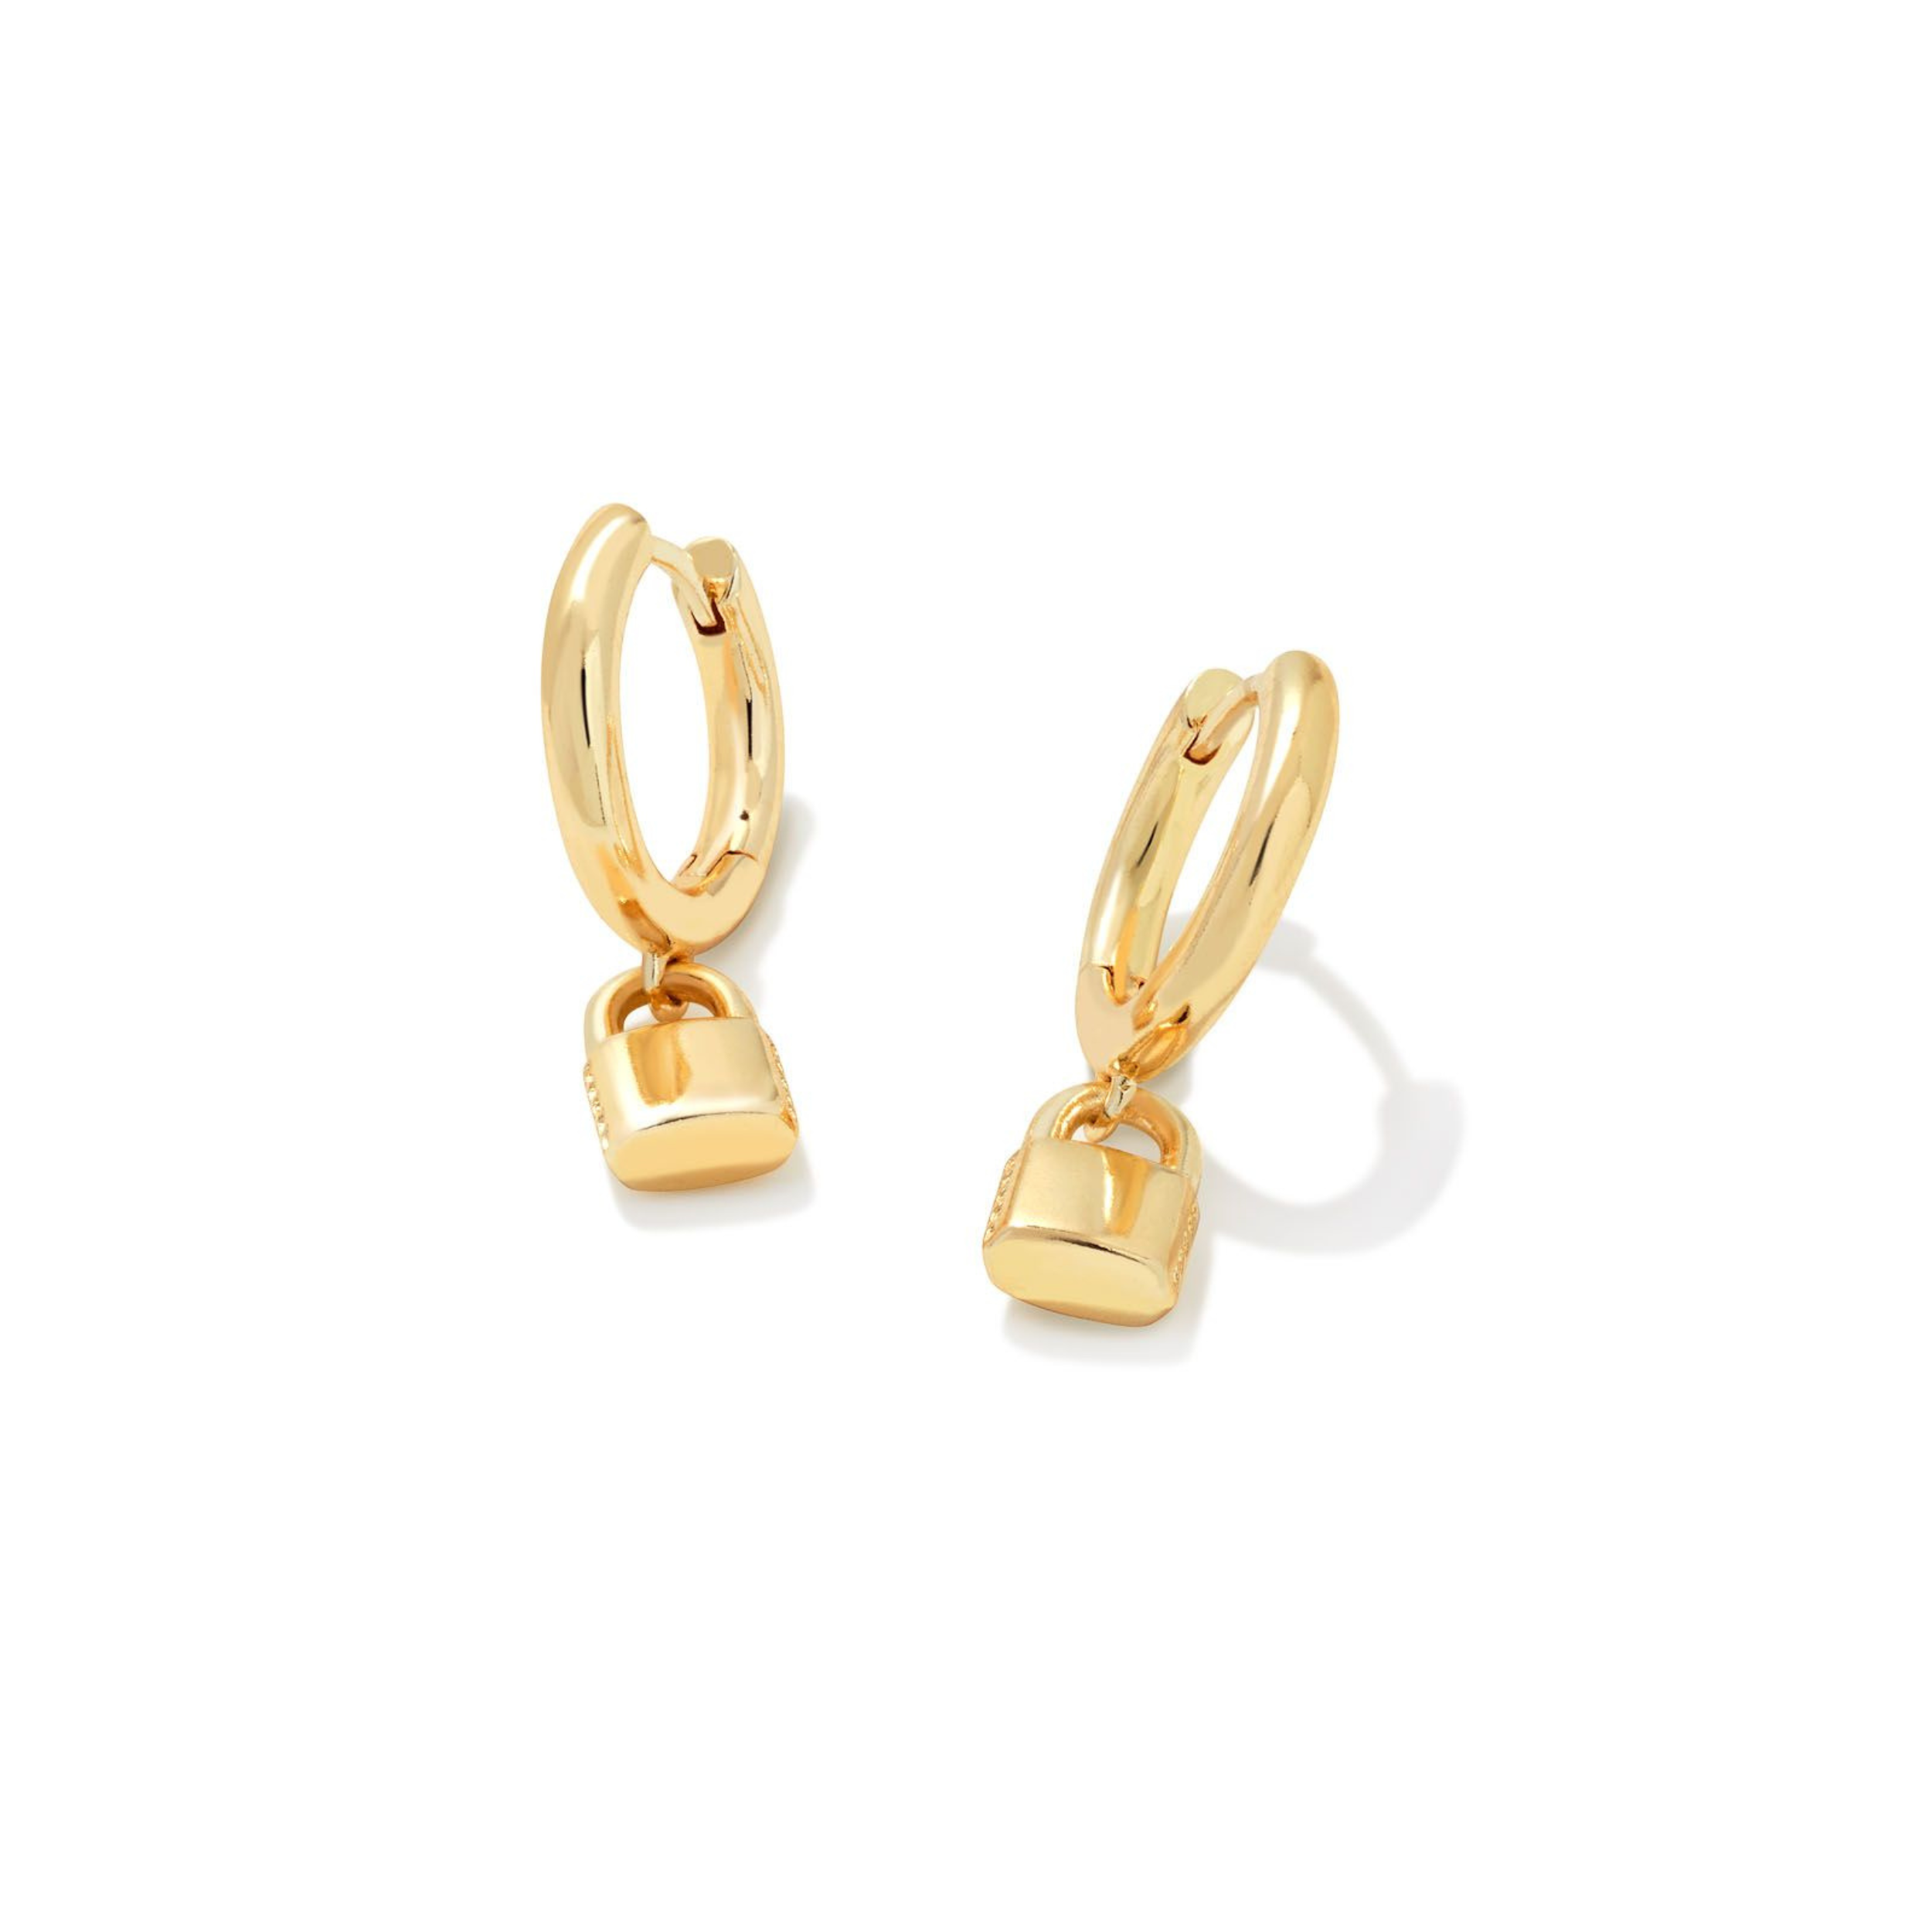 Kendra Scott | Jess Lock Huggie Earrings in Gold - Giddy Up Glamour Boutique